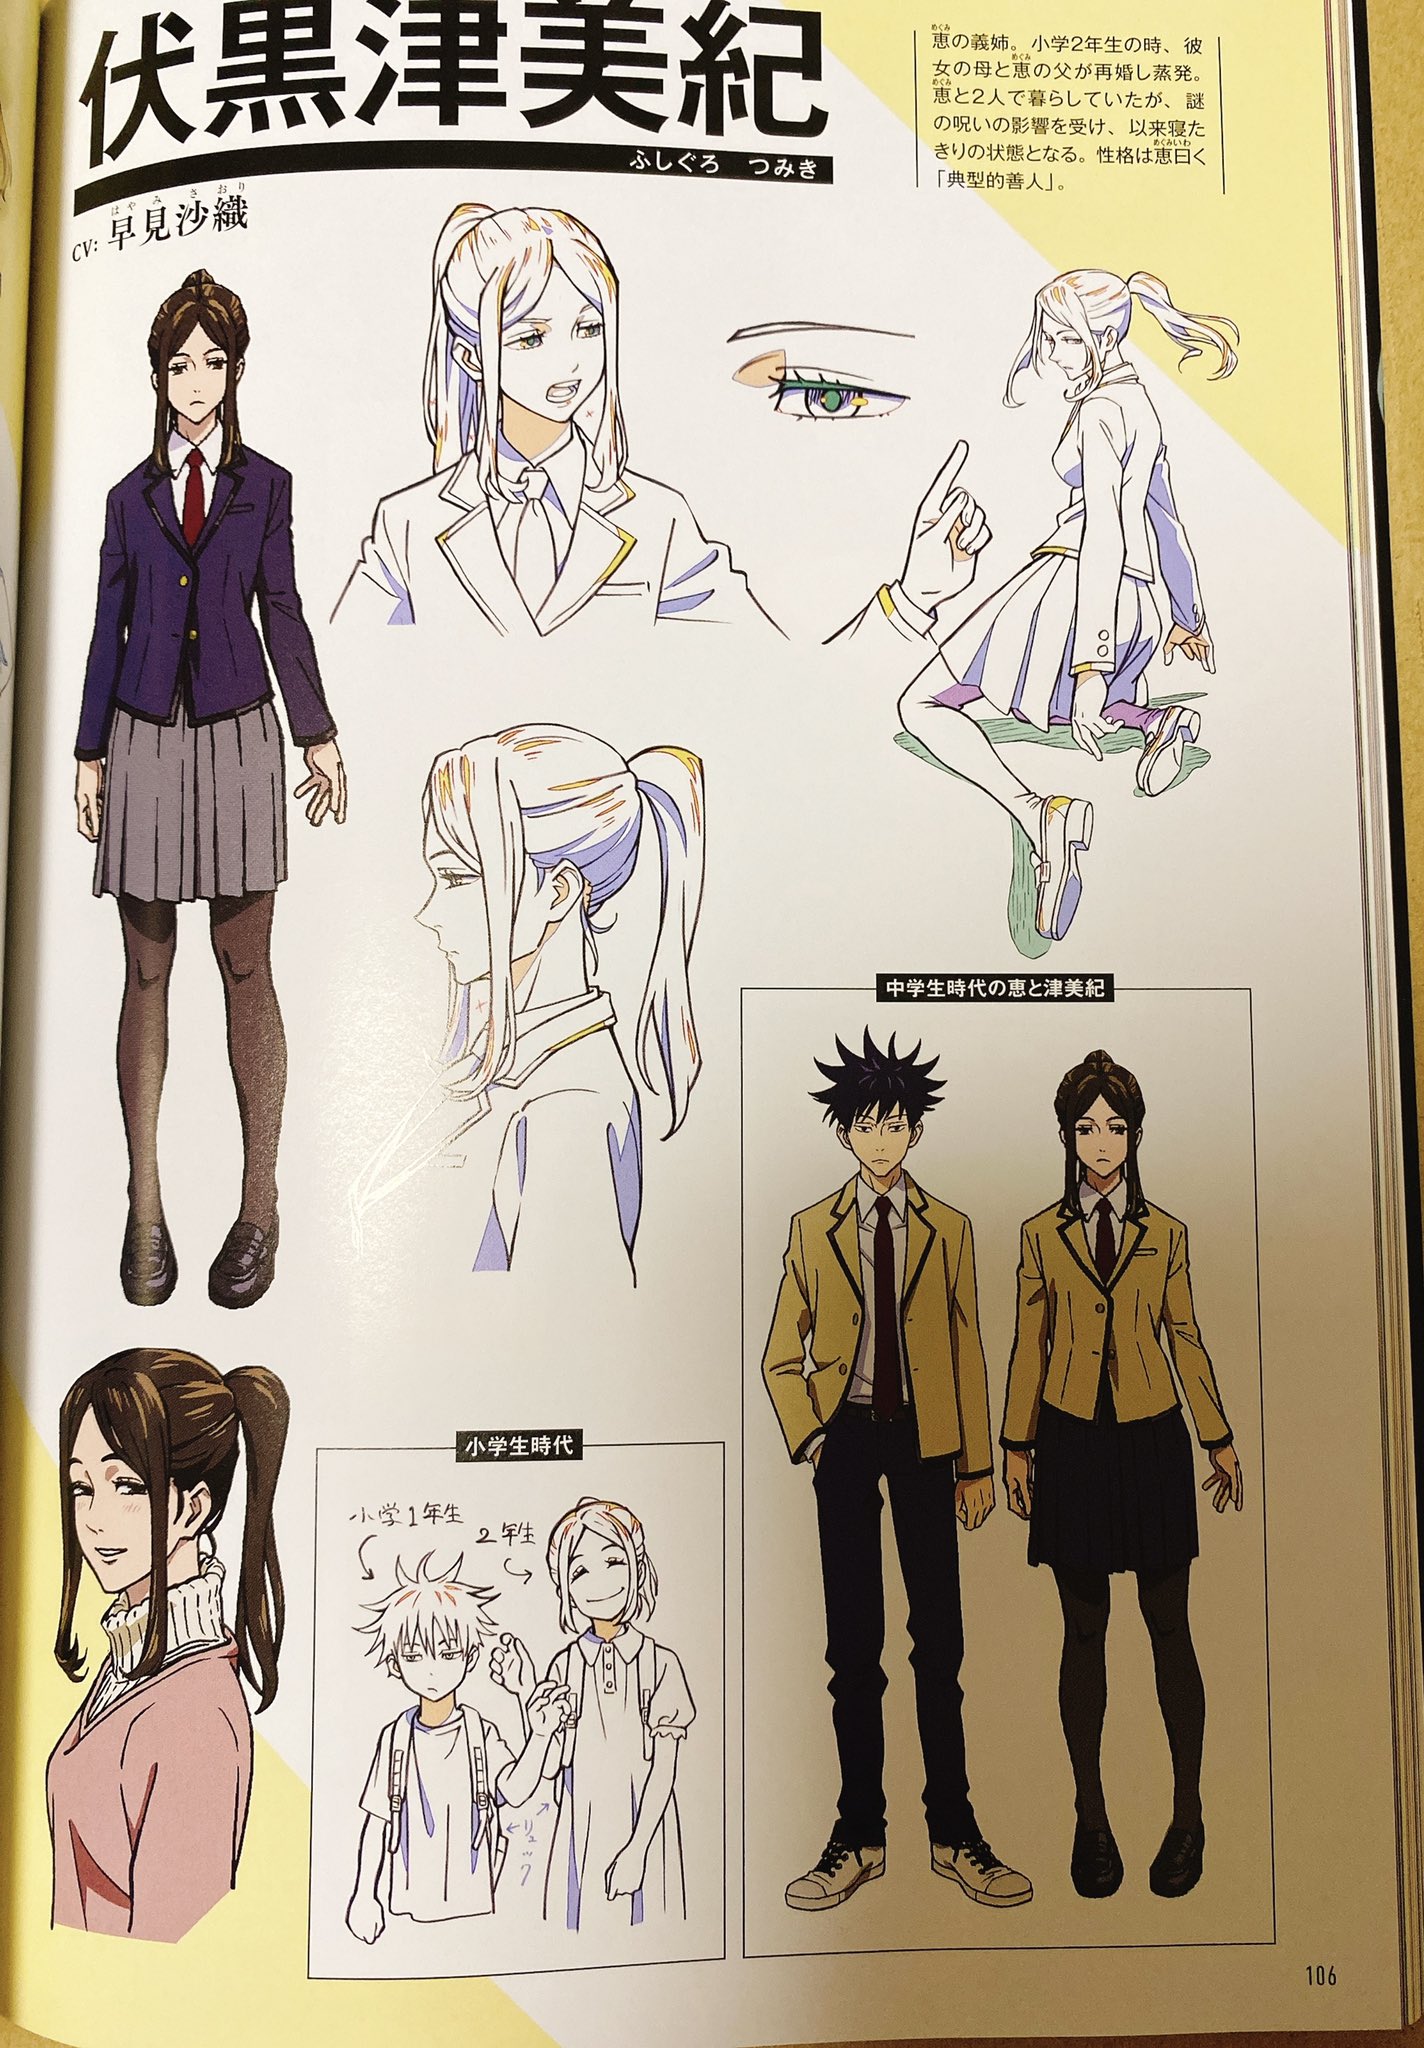 Y u m i ( ֊' '֊) ✨7月6日から呪術2期 ✨ on X: Jujutsu Kaisen Complete Book:  Character design of Tsukumo Yuki in the anime~  / X